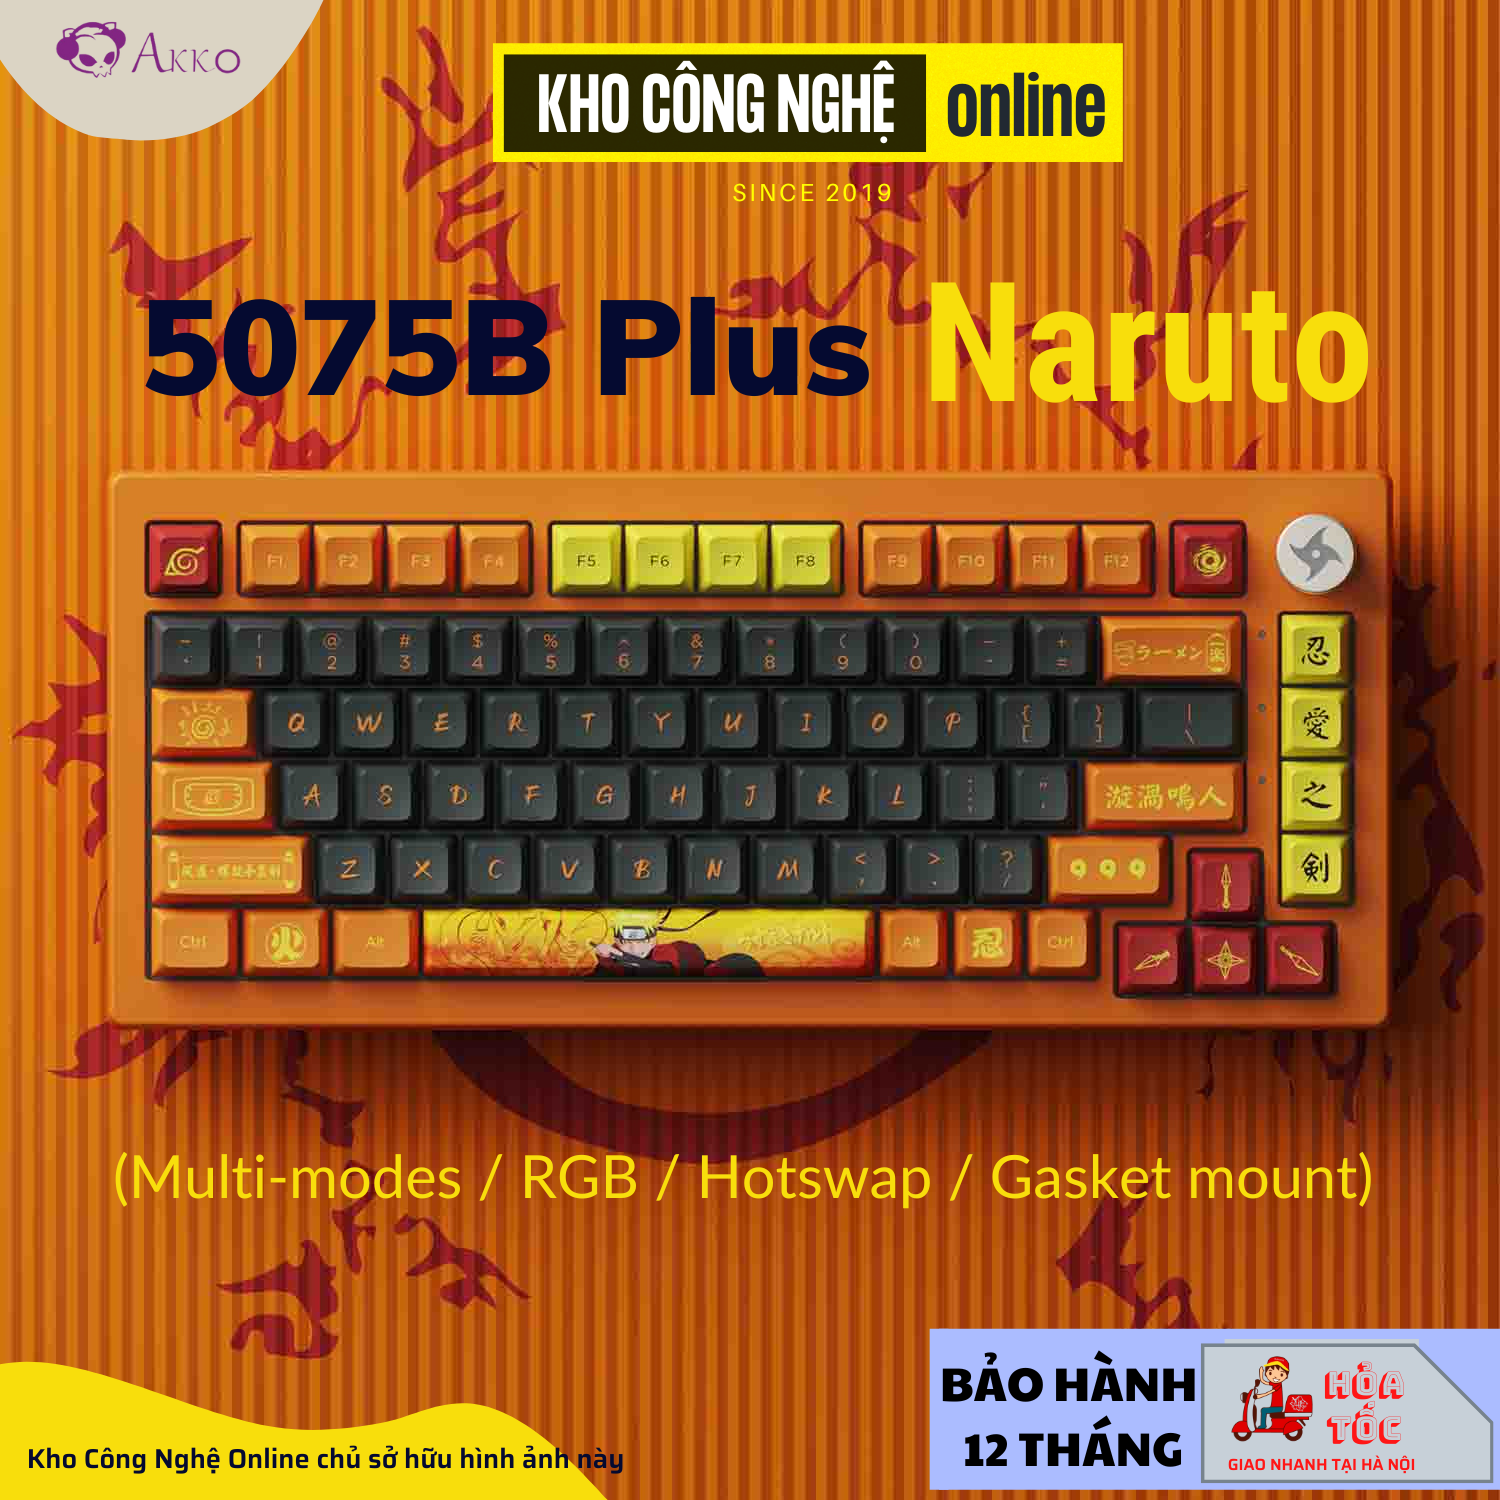 Bàn phím cơ AKKO 5075B Plus Naruto (Multi-modes / RGB / Hotswap / Gasket mount)